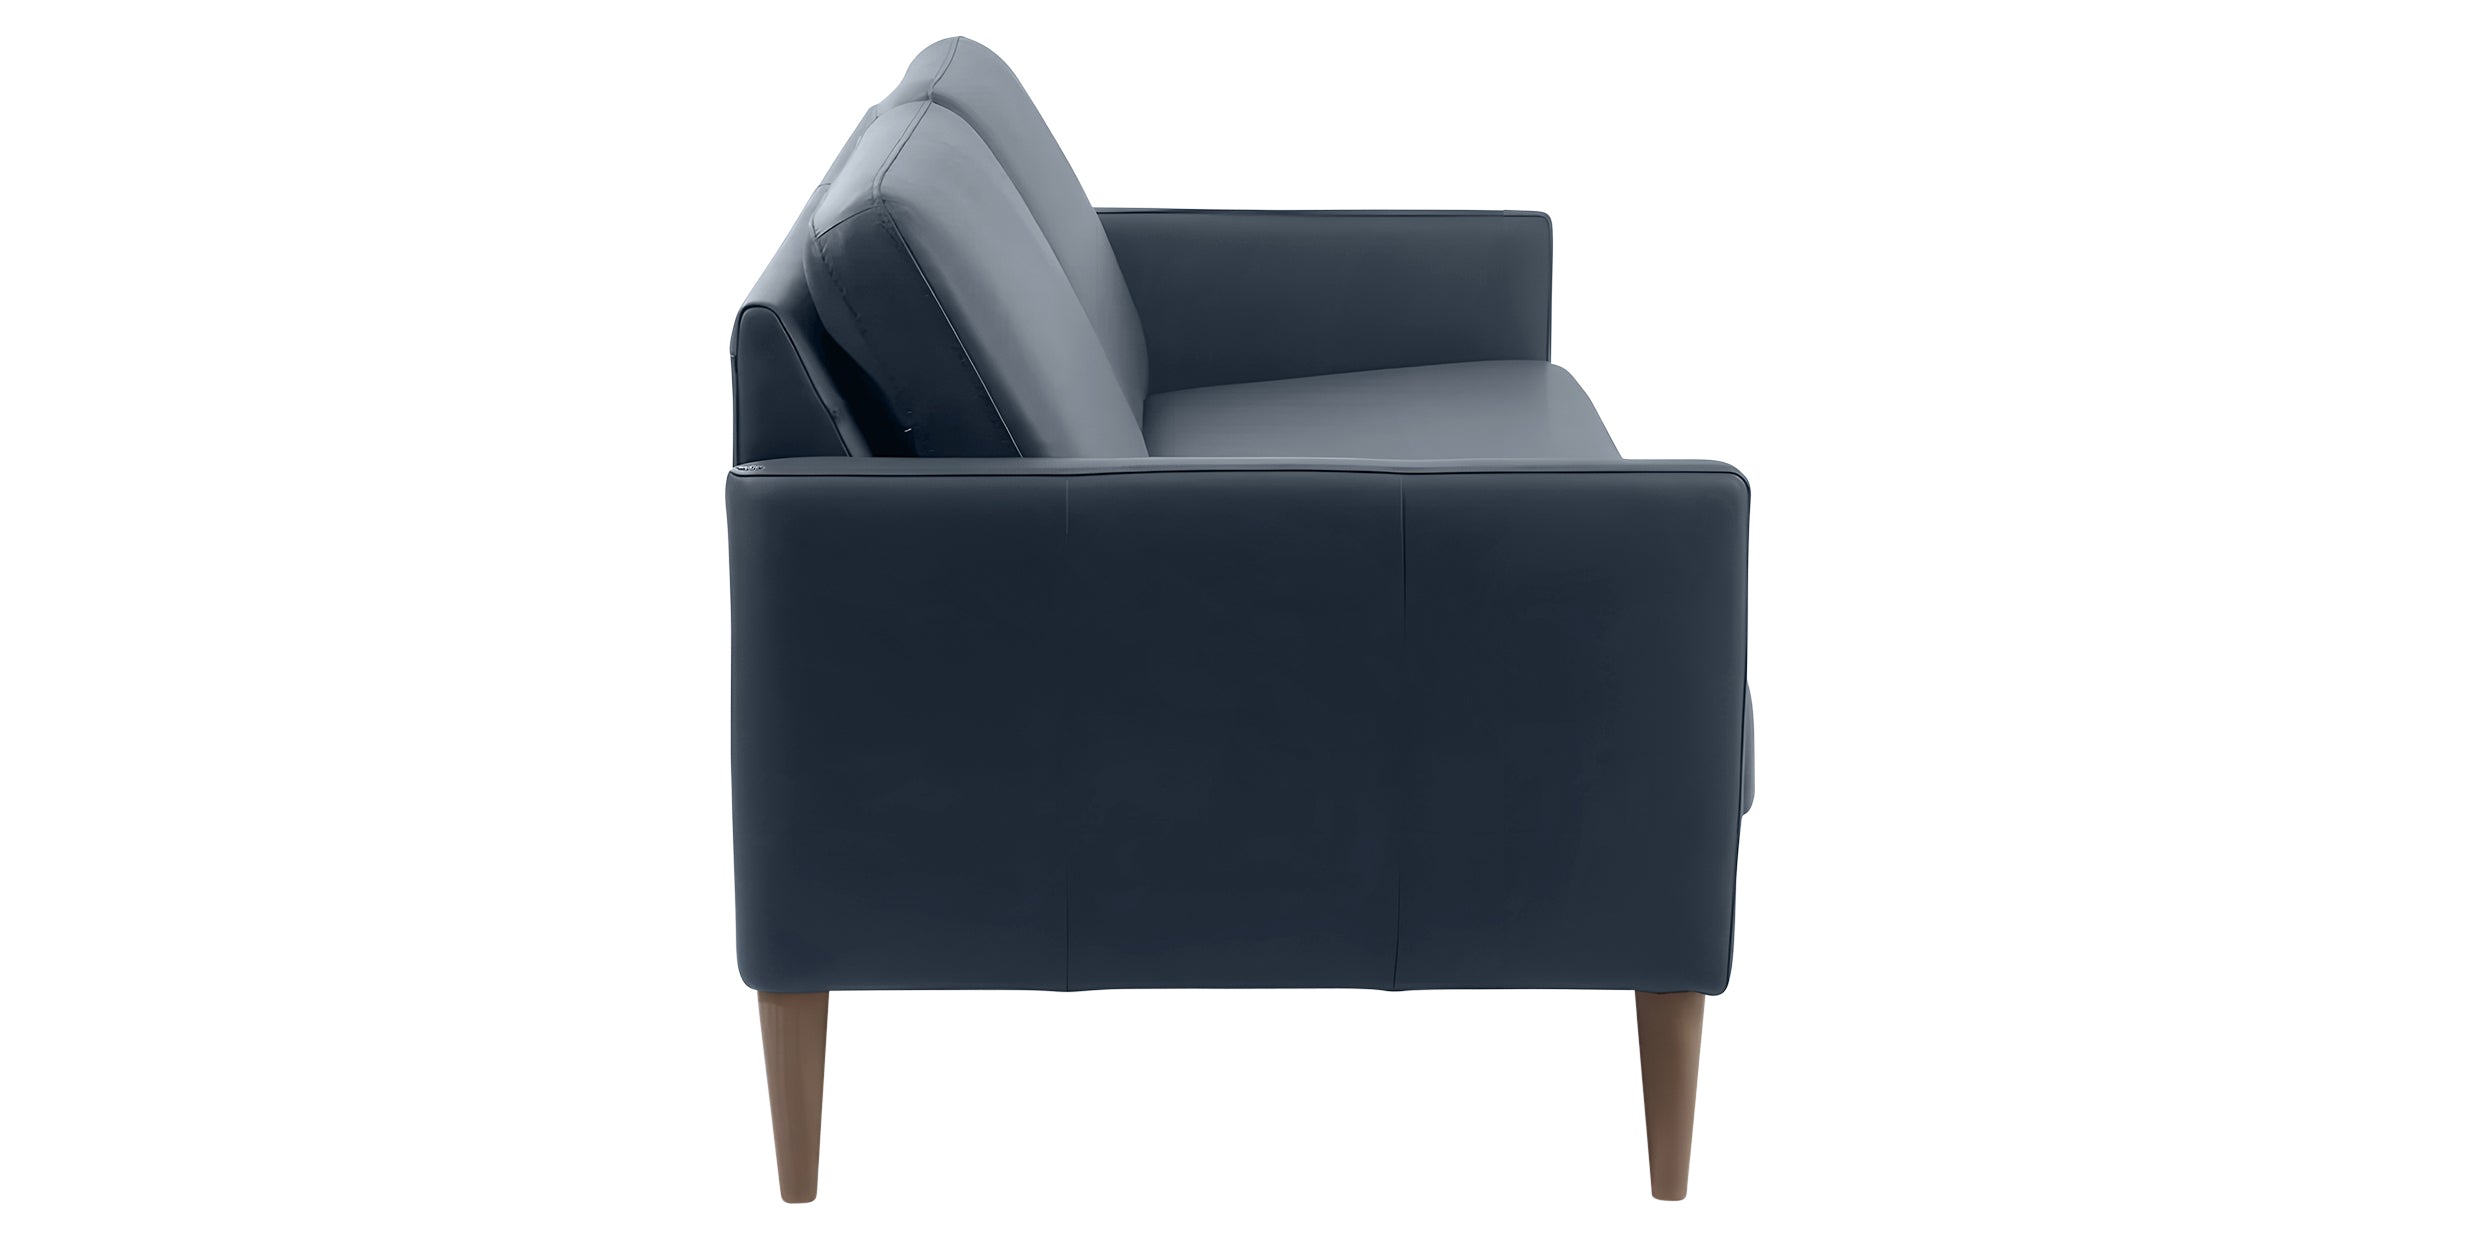 Trend Leather Pacific | Norwegian Comfort Nordberg 3-Seater Duo Sofa - Promo | Valley Ridge Furniture